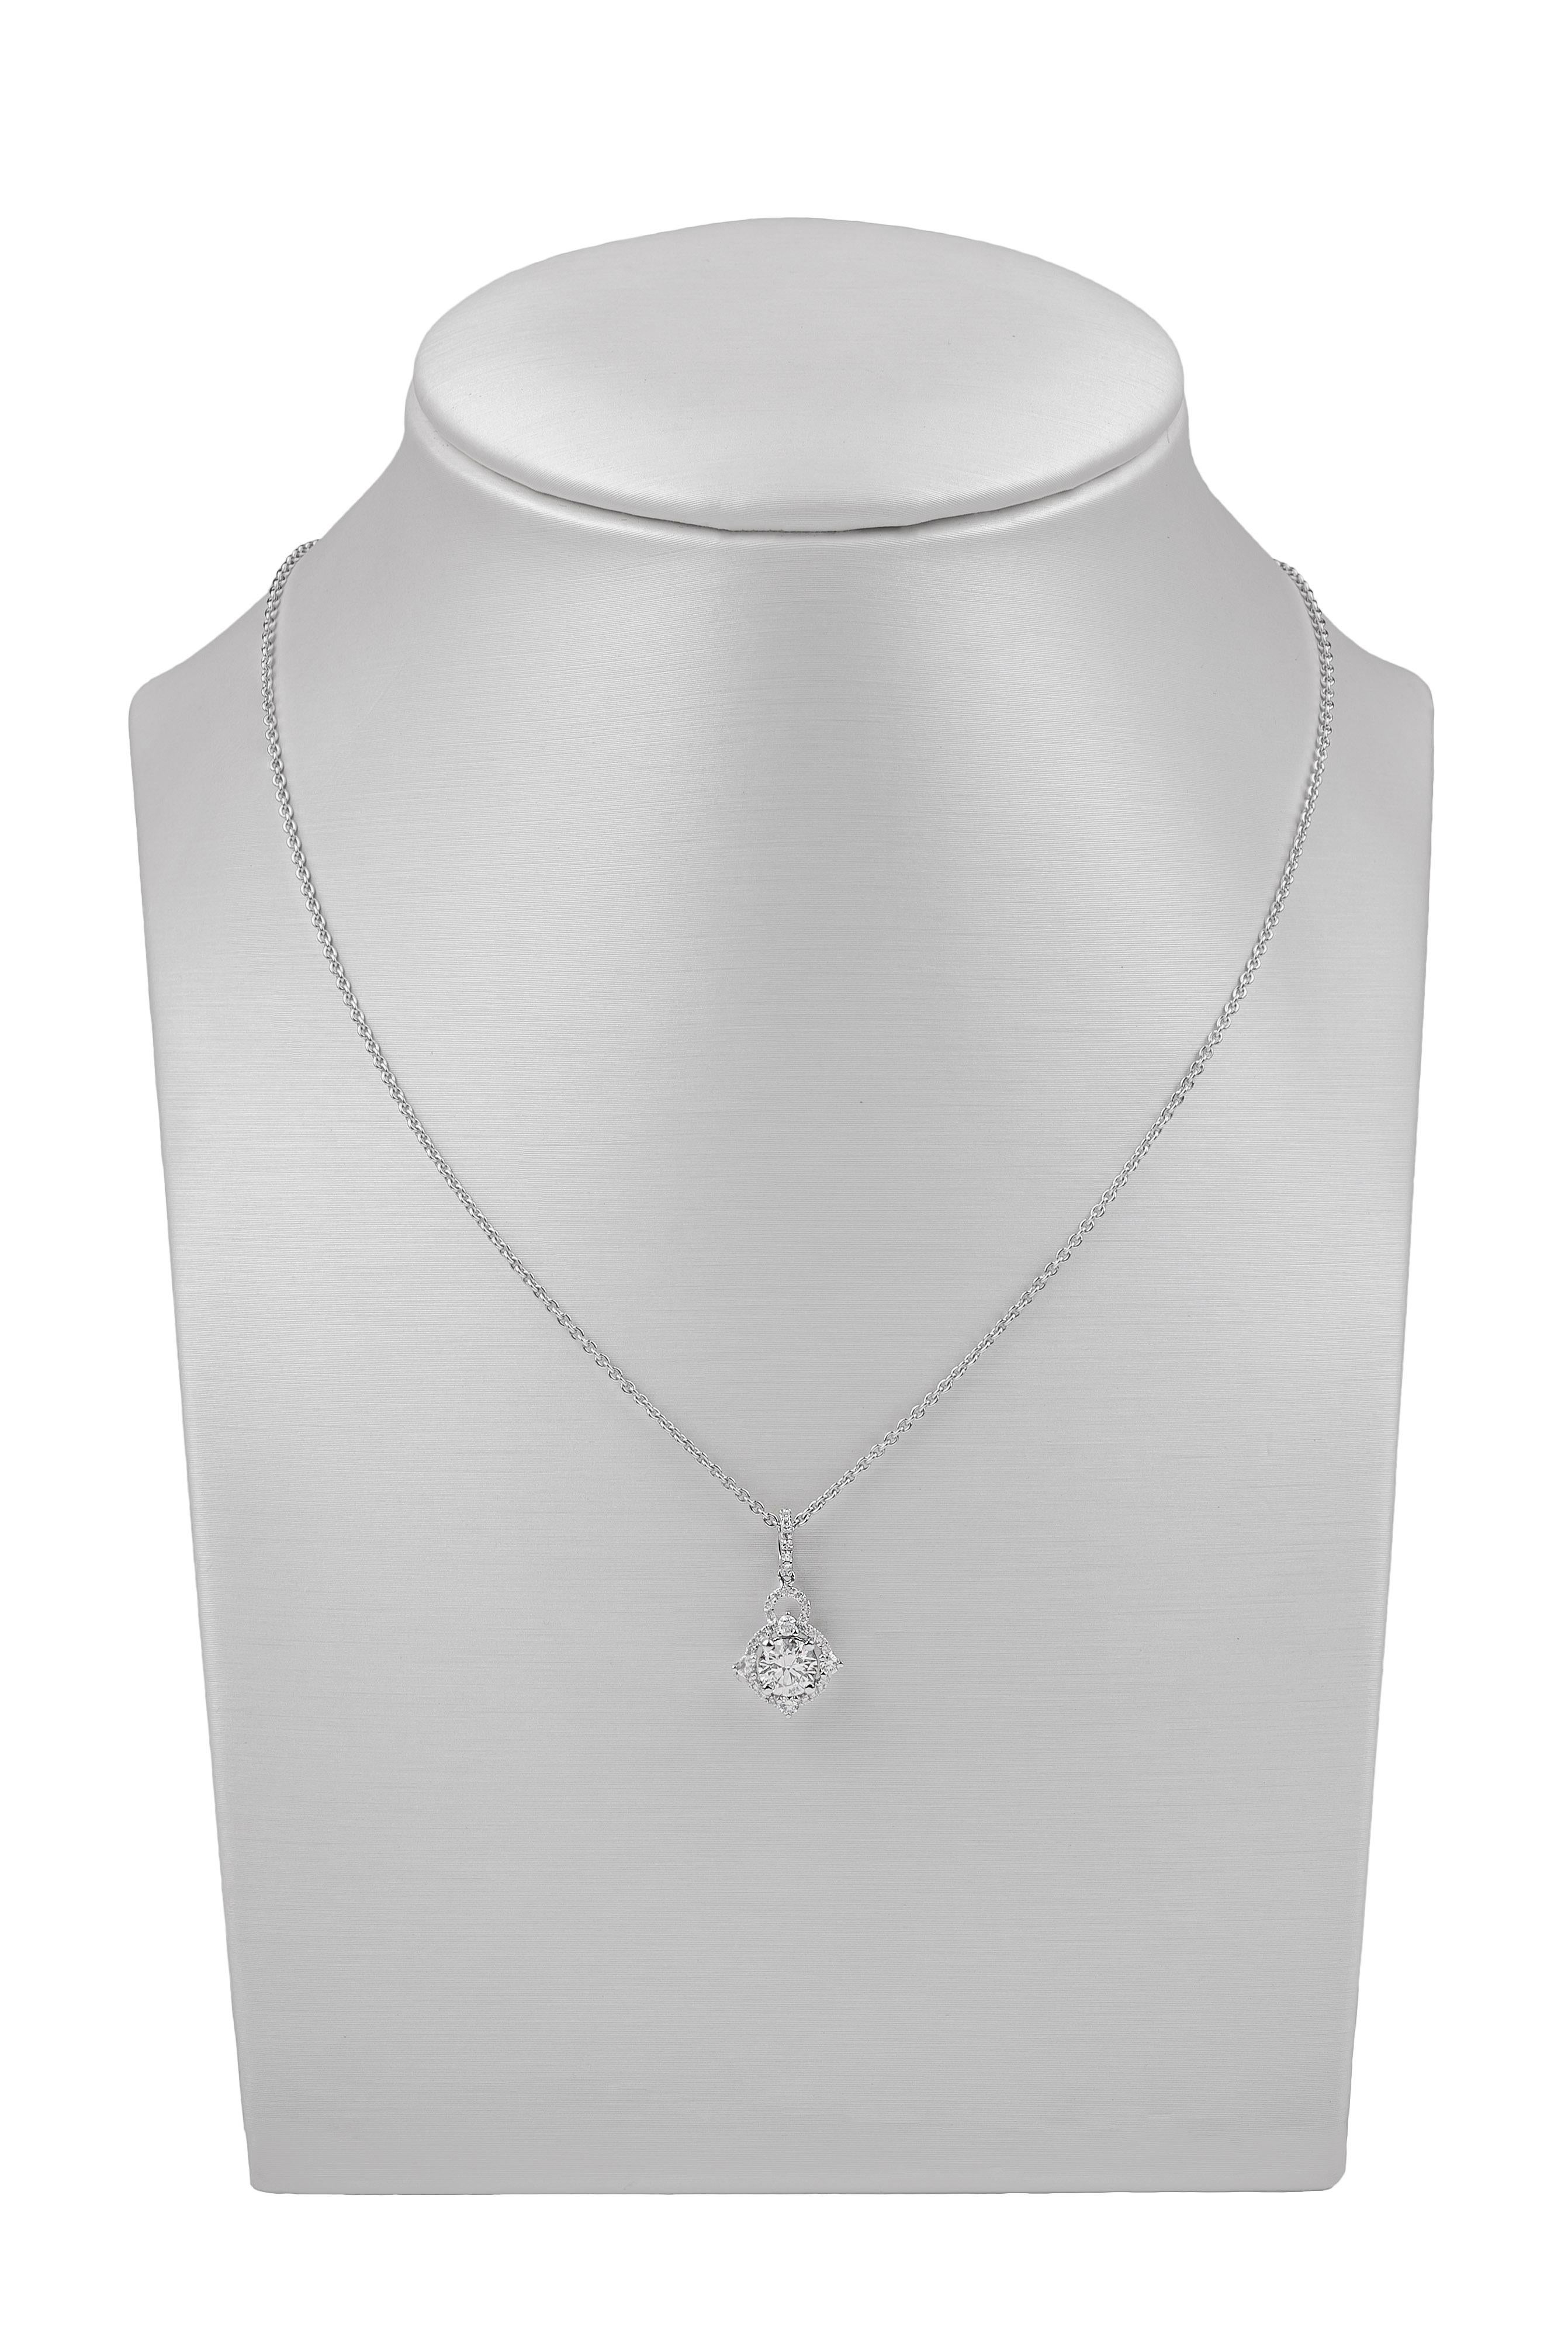 18k White Gold and Brilliant Cut Diamonds Pendant Necklace In New Condition For Sale In Rome, IT